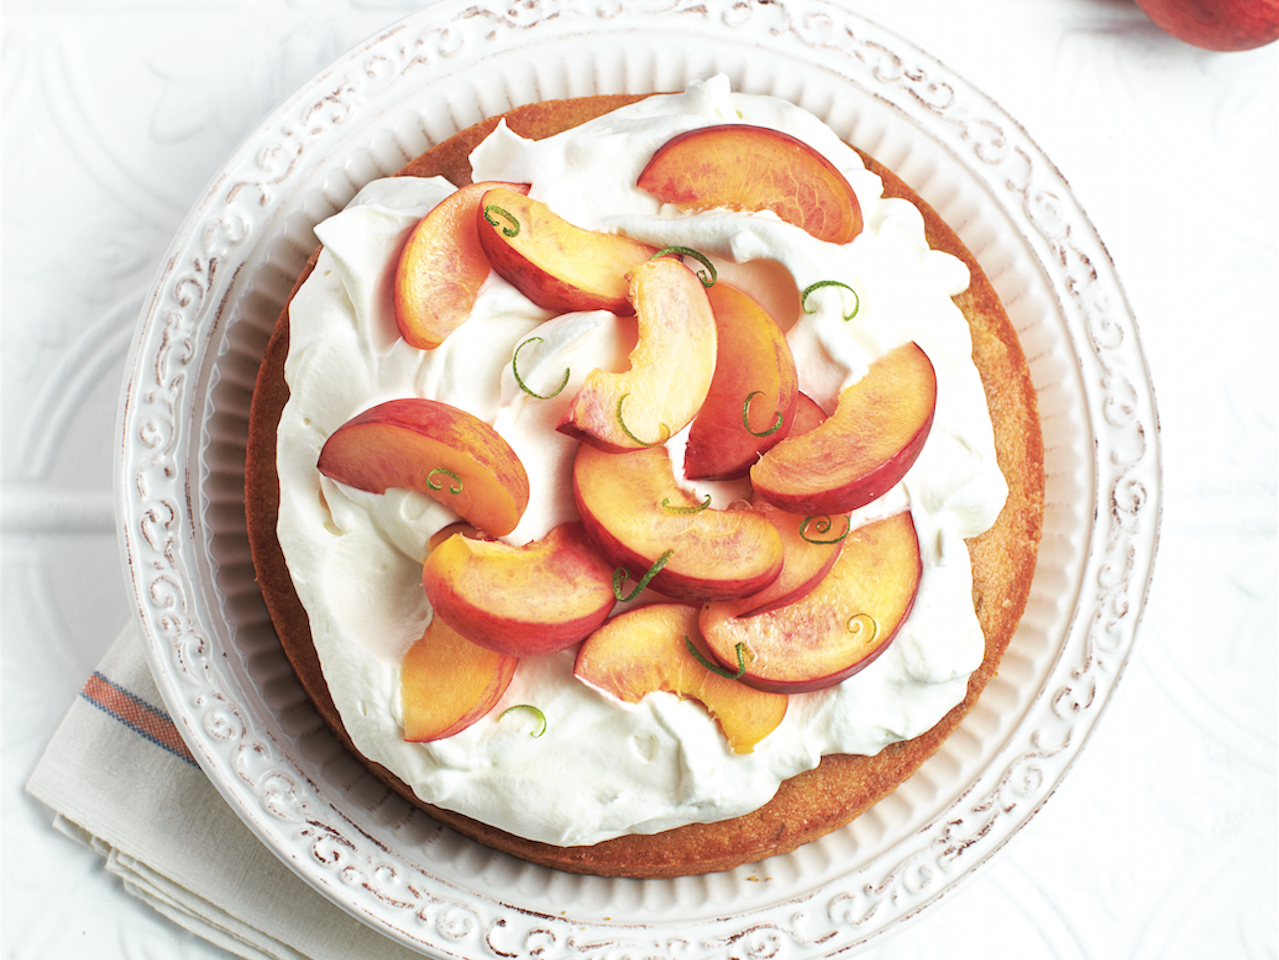 Peach recipes: Peaches and cream cake